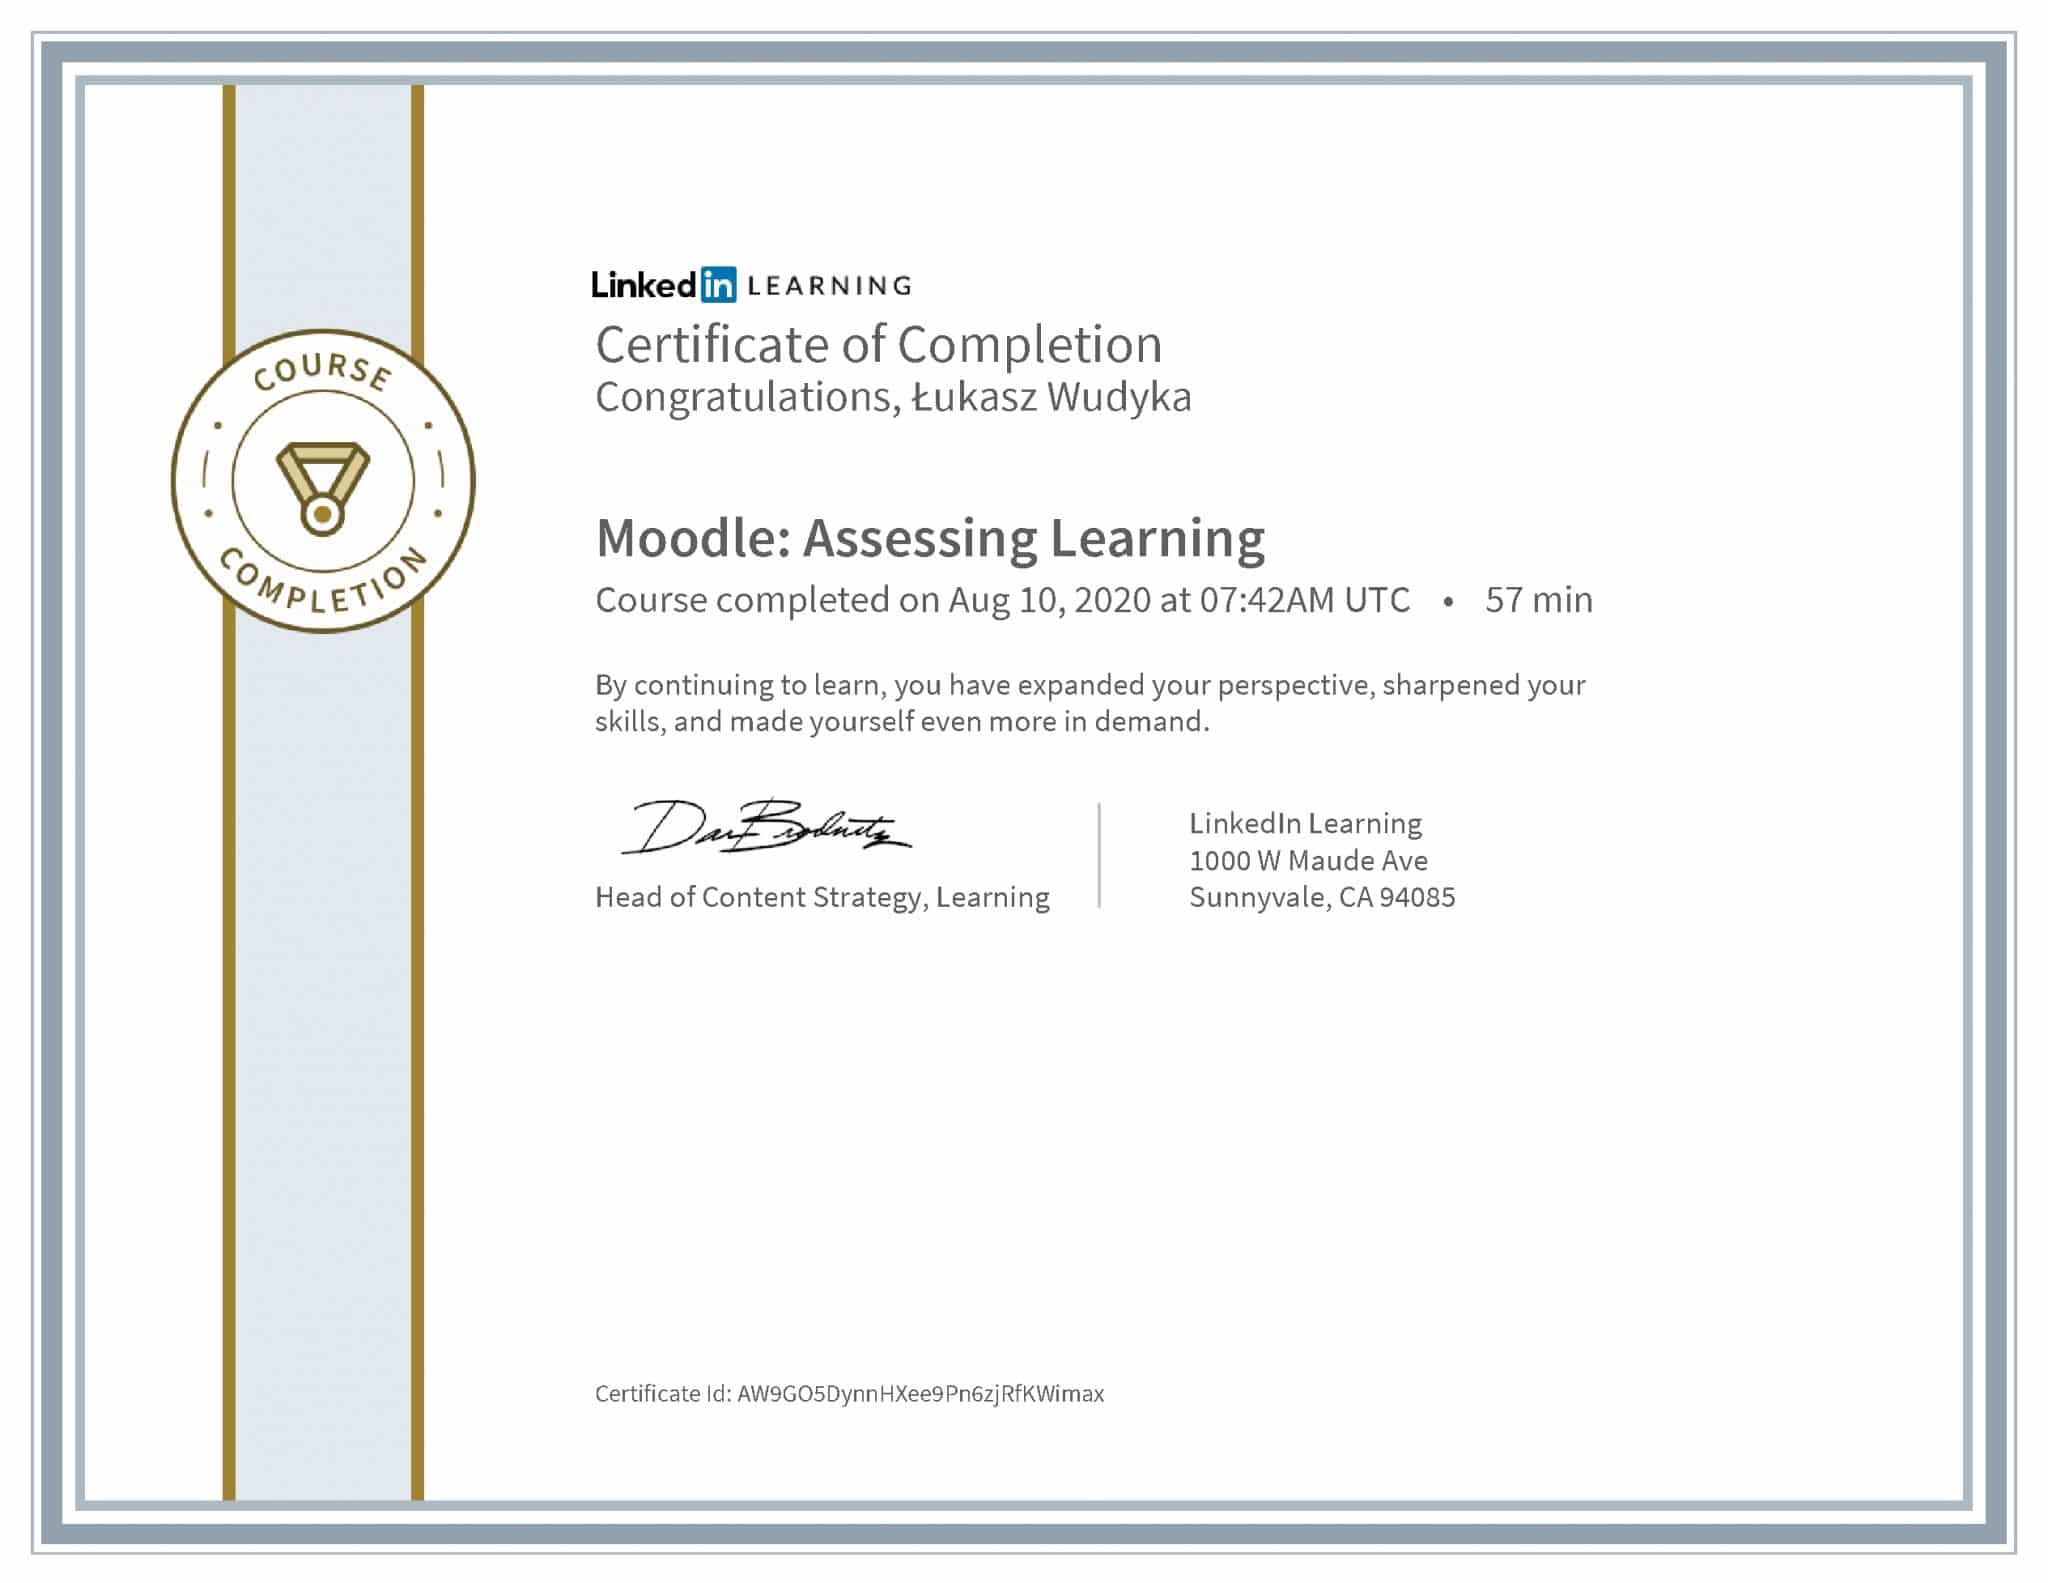 Łukasz Wudyka certyfikat LinkedIn Moodle: Assessing Learning